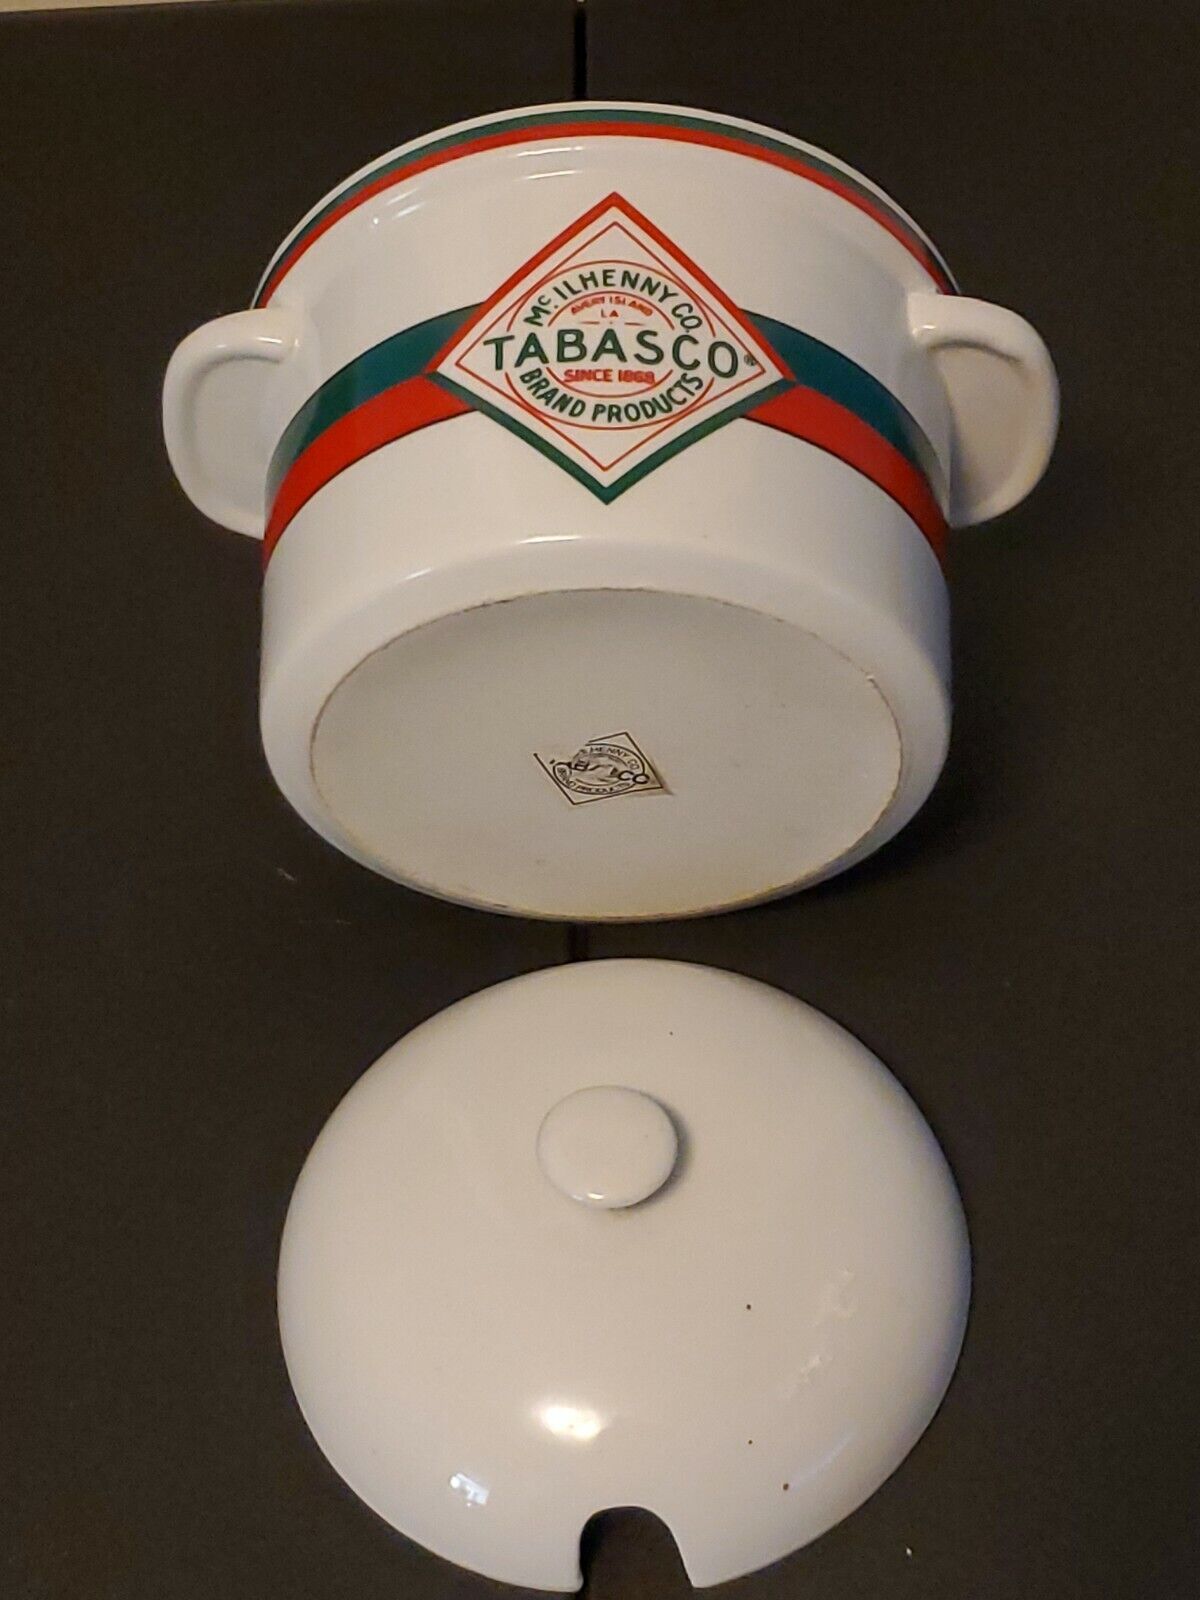 Mcilhenny Co. Tabasco Brand Products Ceramic Pot